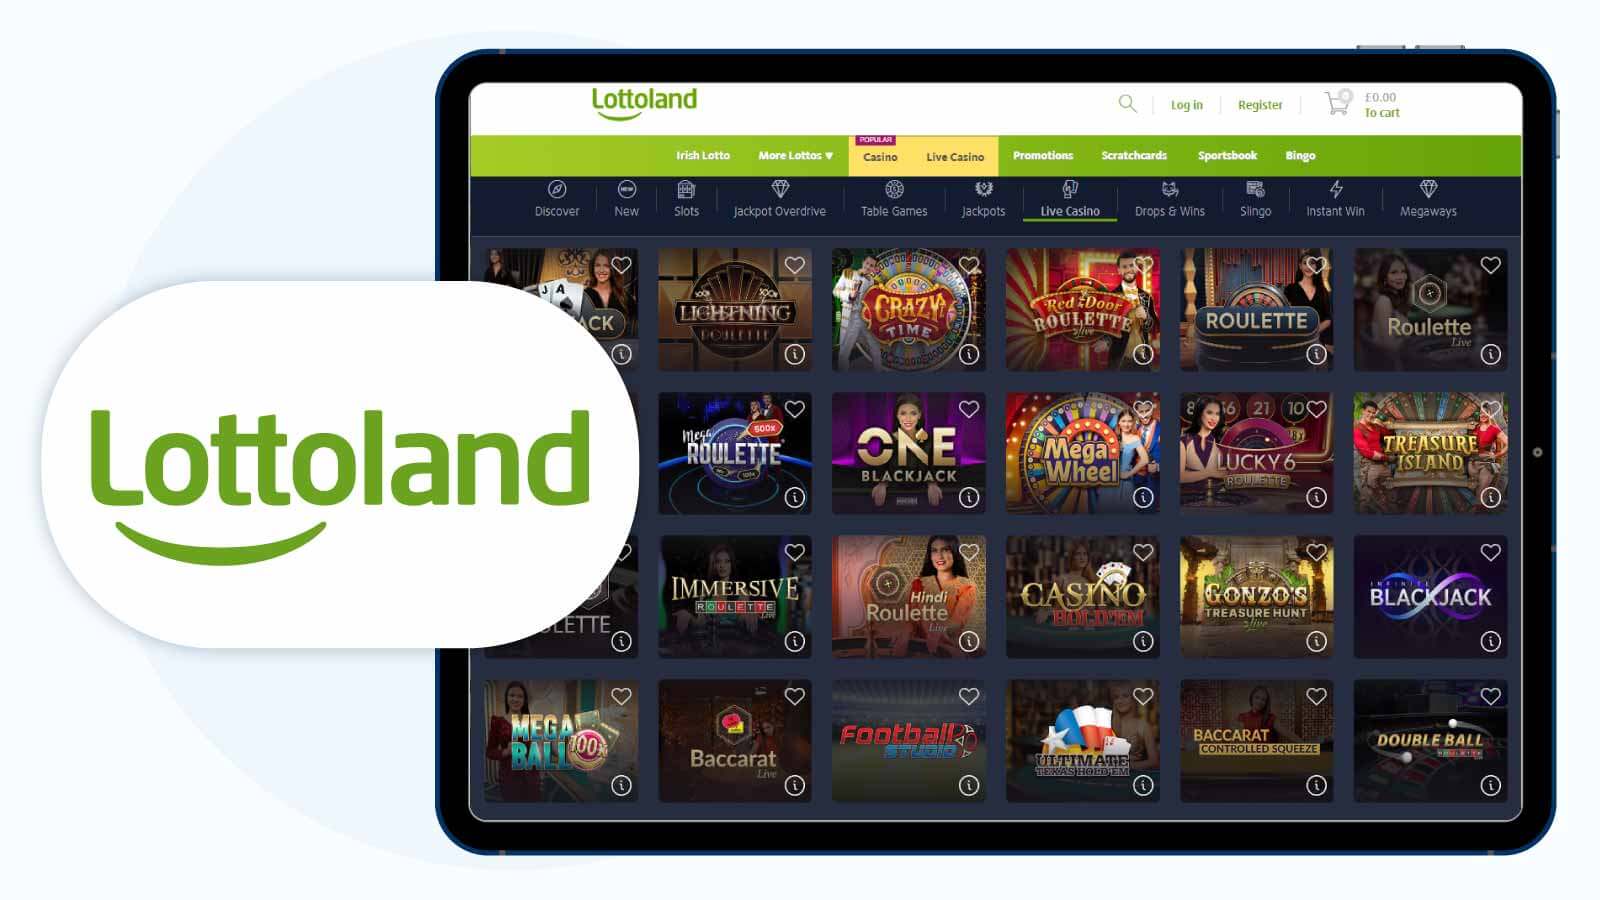 5_-Lottoland-Casino--Best-Online-Casino-UK-for-Live-Dealers